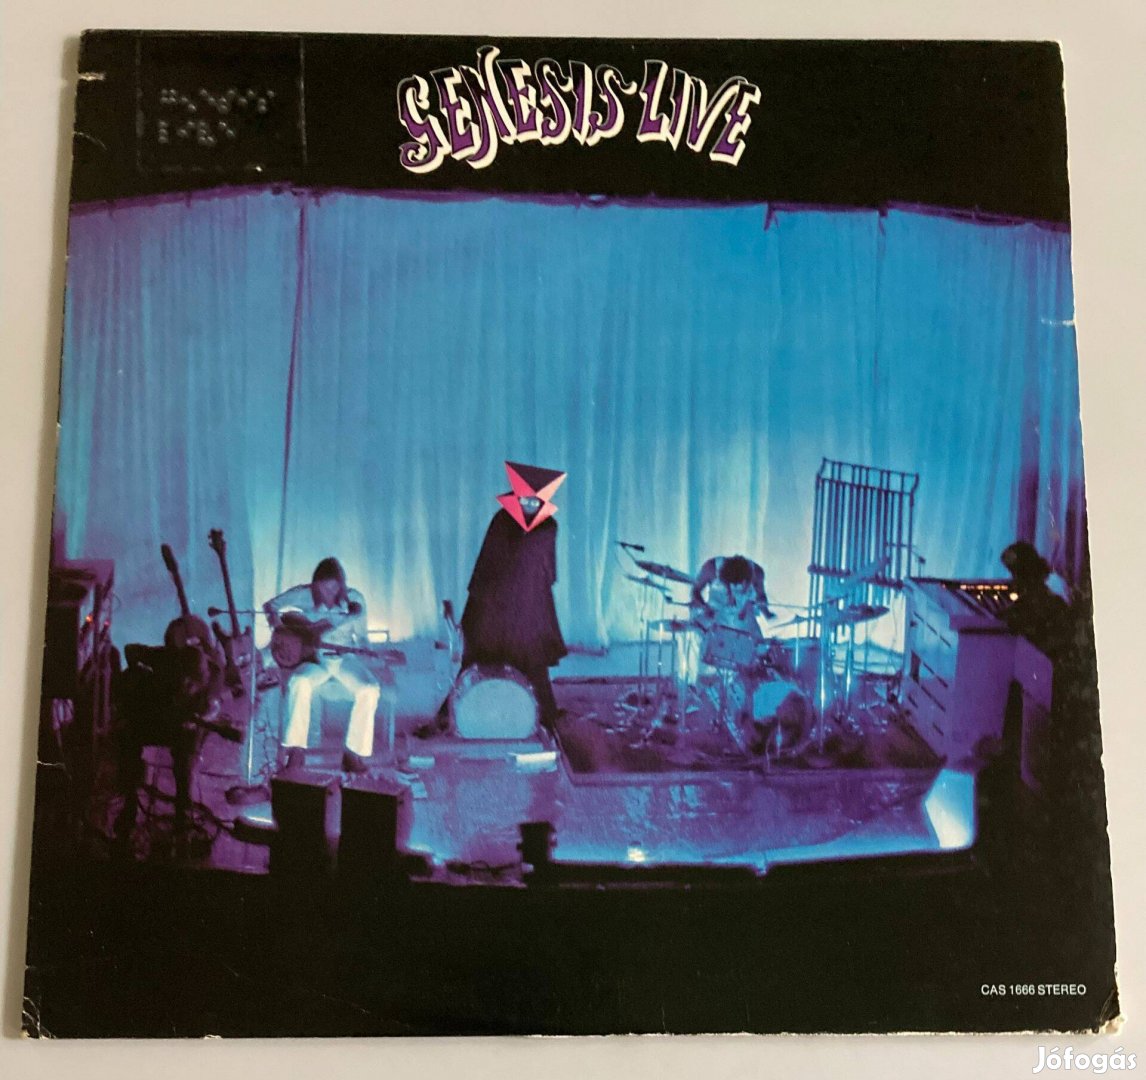 Genesis - Live (USA, Pink Charisma, 1974)